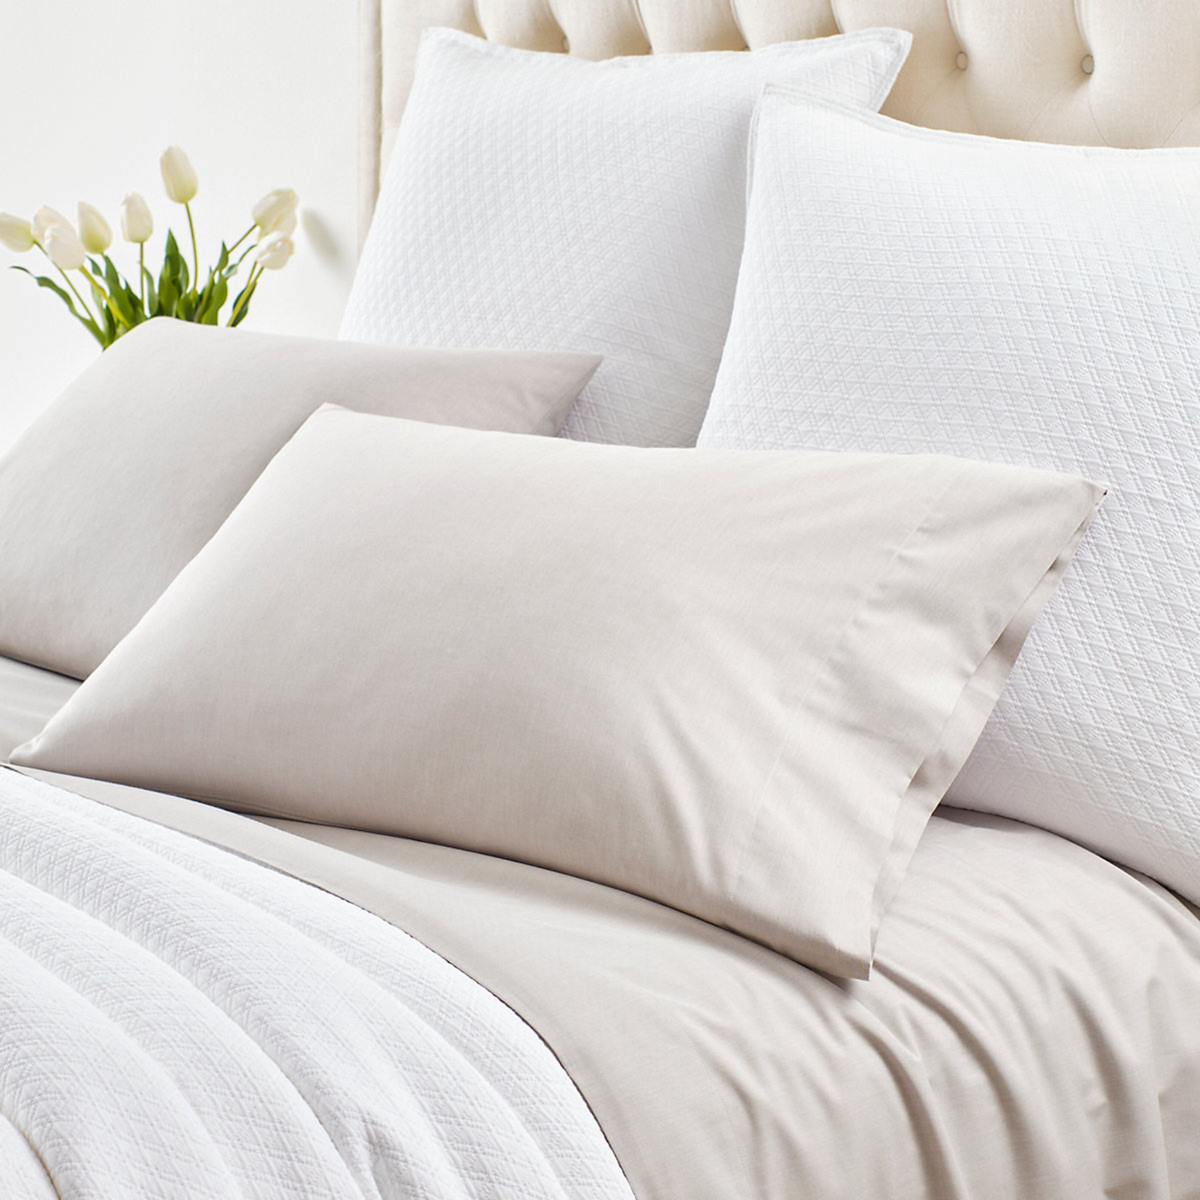 Pillowcase Closeup of Pine Cone Hill Cozy Cotton Bedding in Dove Grey Color